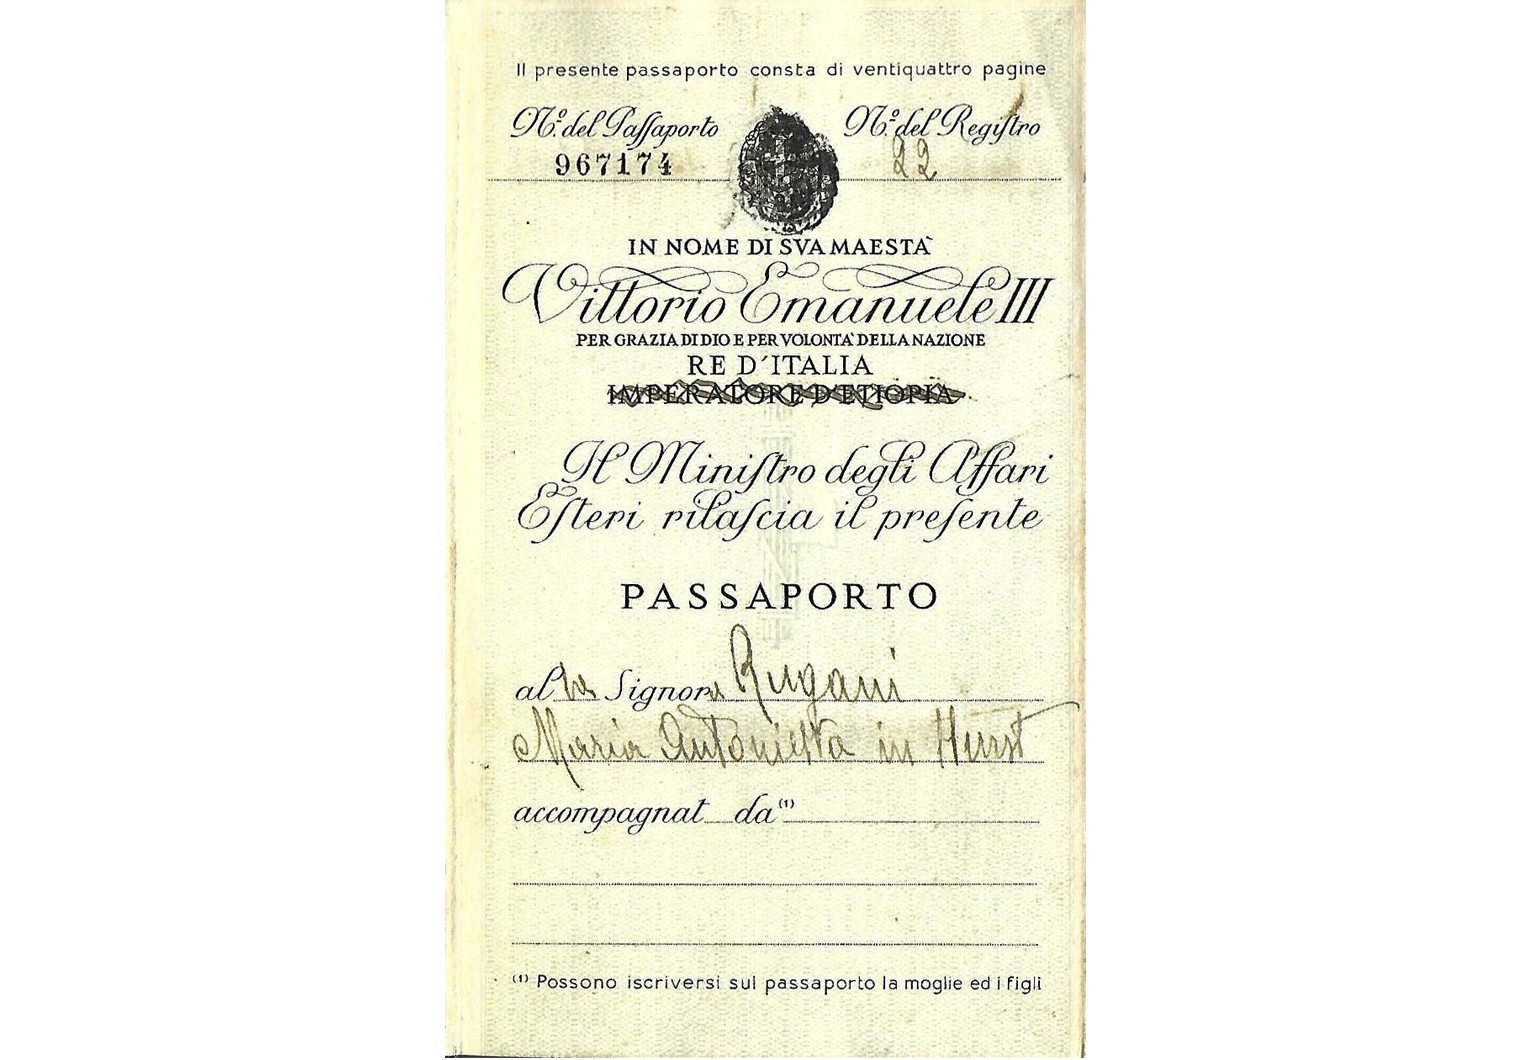 1941 Italian passport used for the US